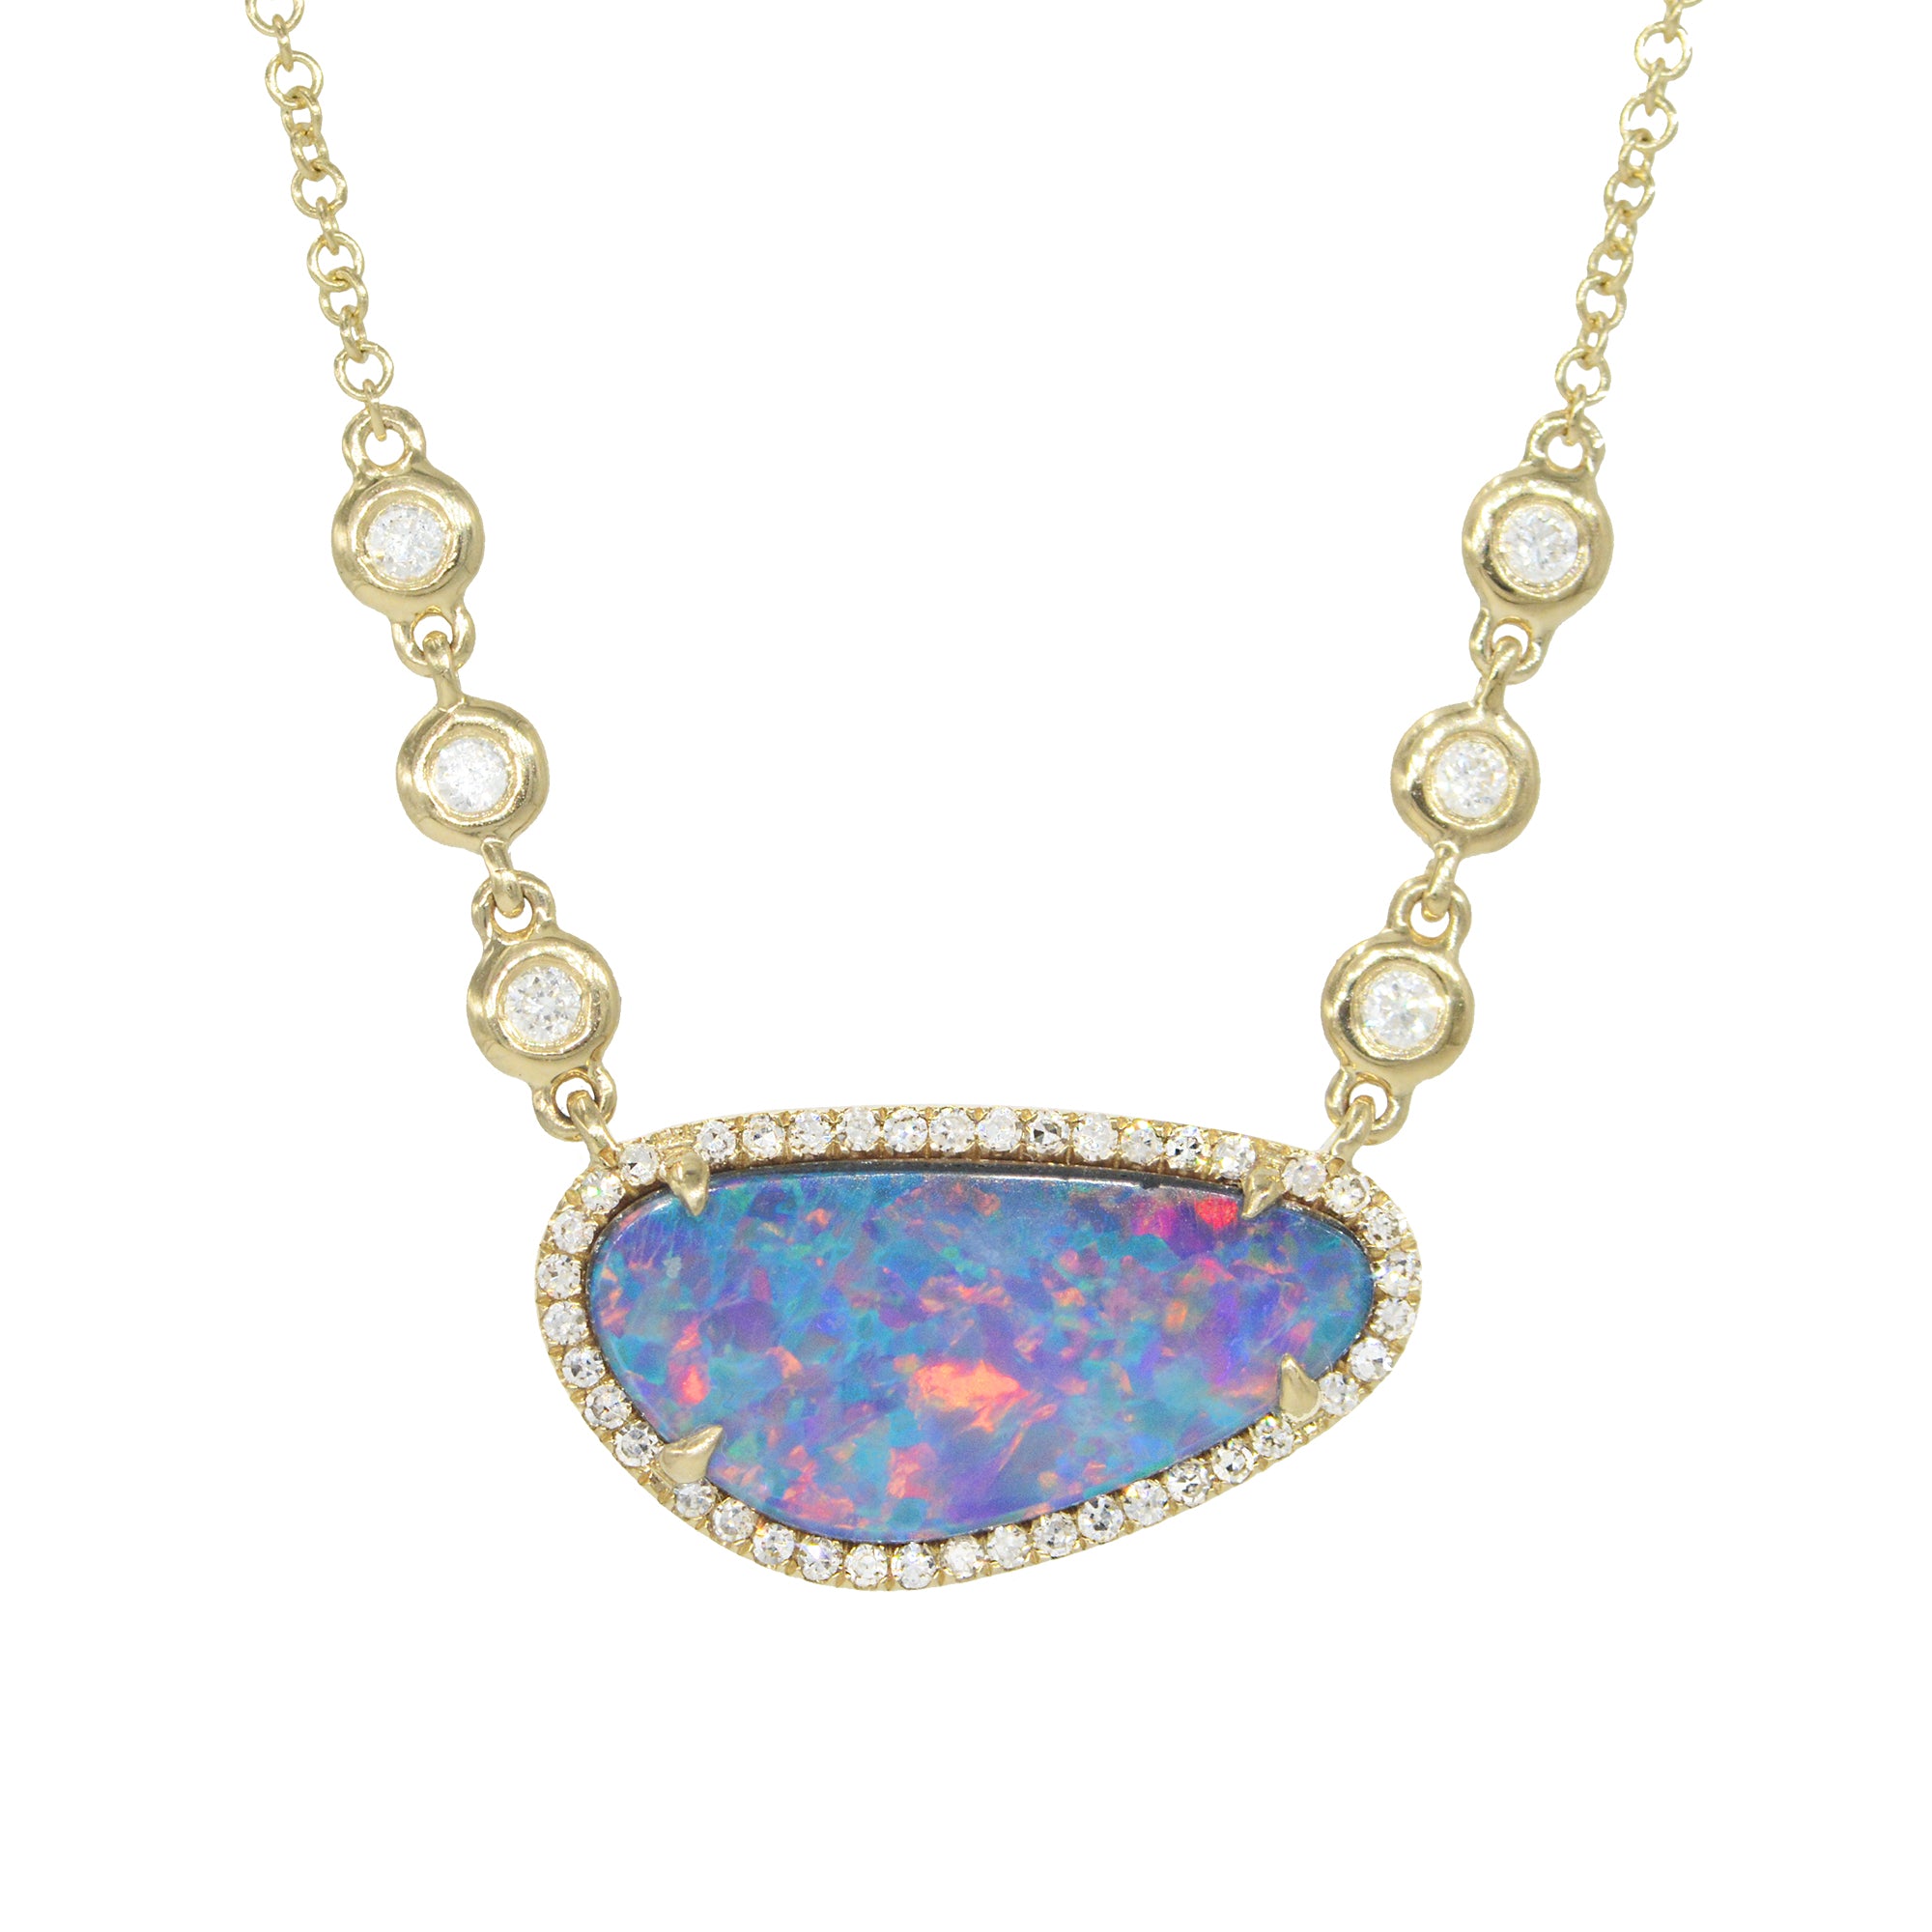 boulder opal necklace dark purple with in-line diamonds